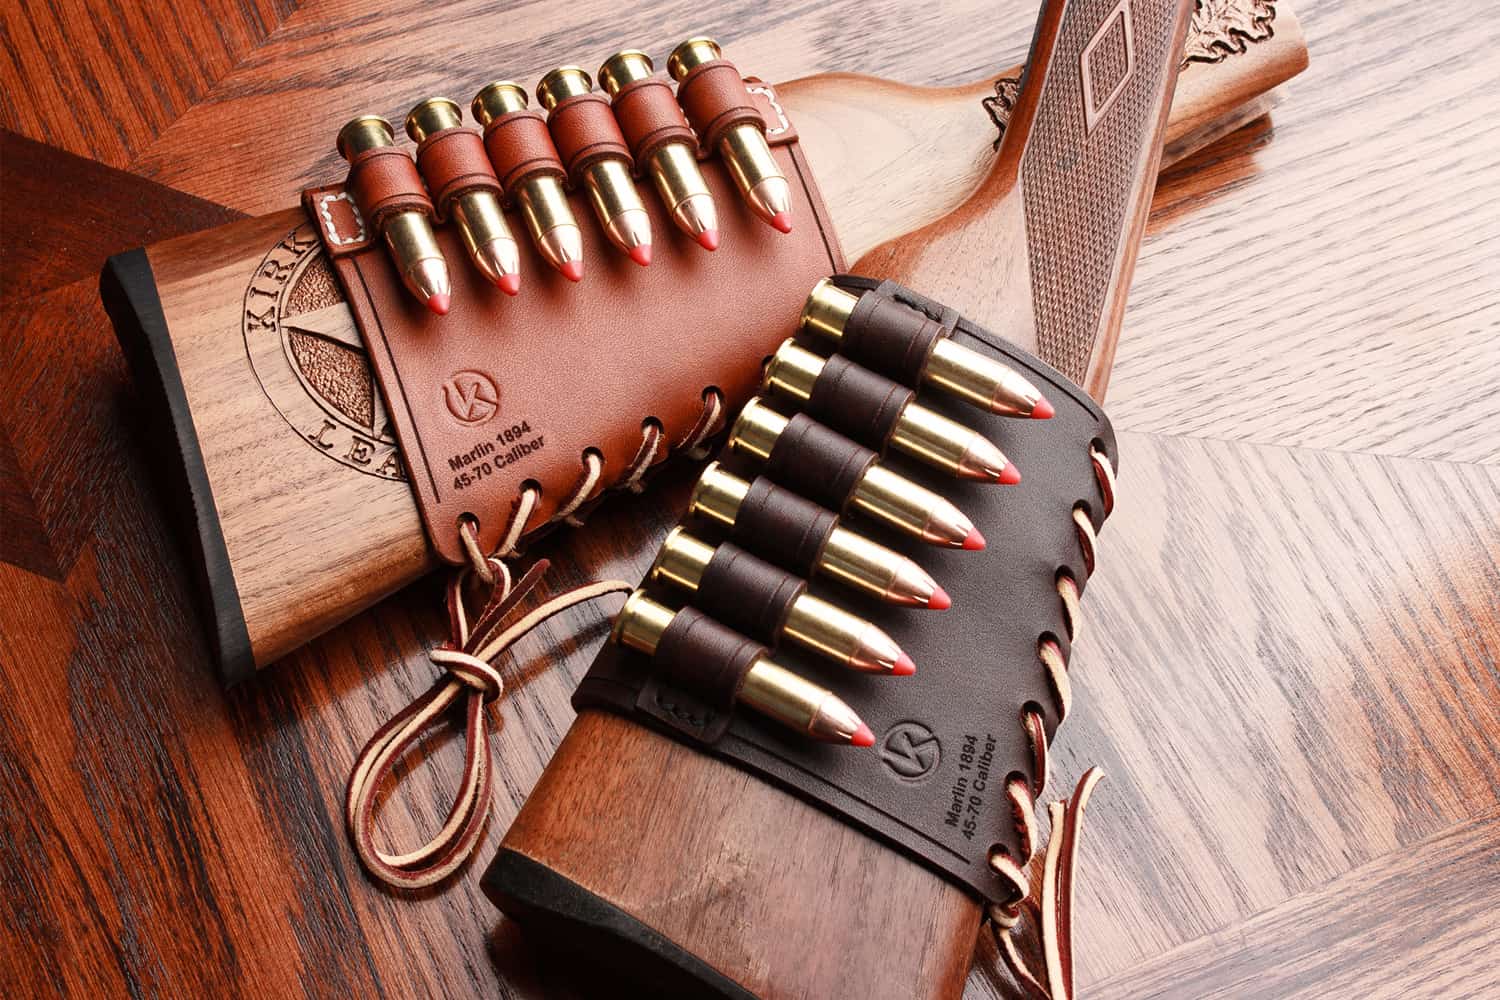 Rifle Cartridge Belt - Model K83 - Kirkpatrick Leather Holsters